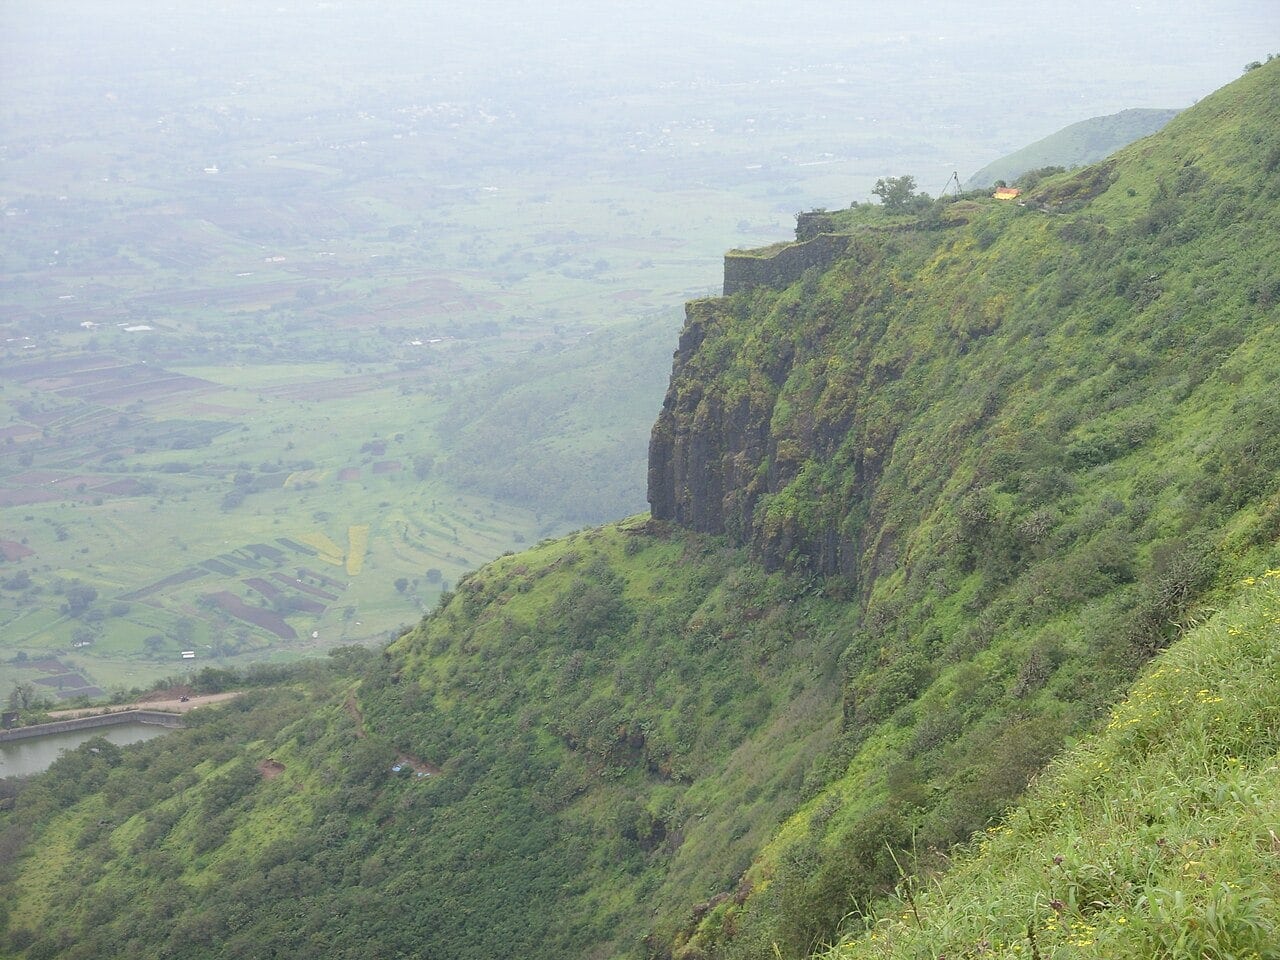 The Greenery of Purandar Fort